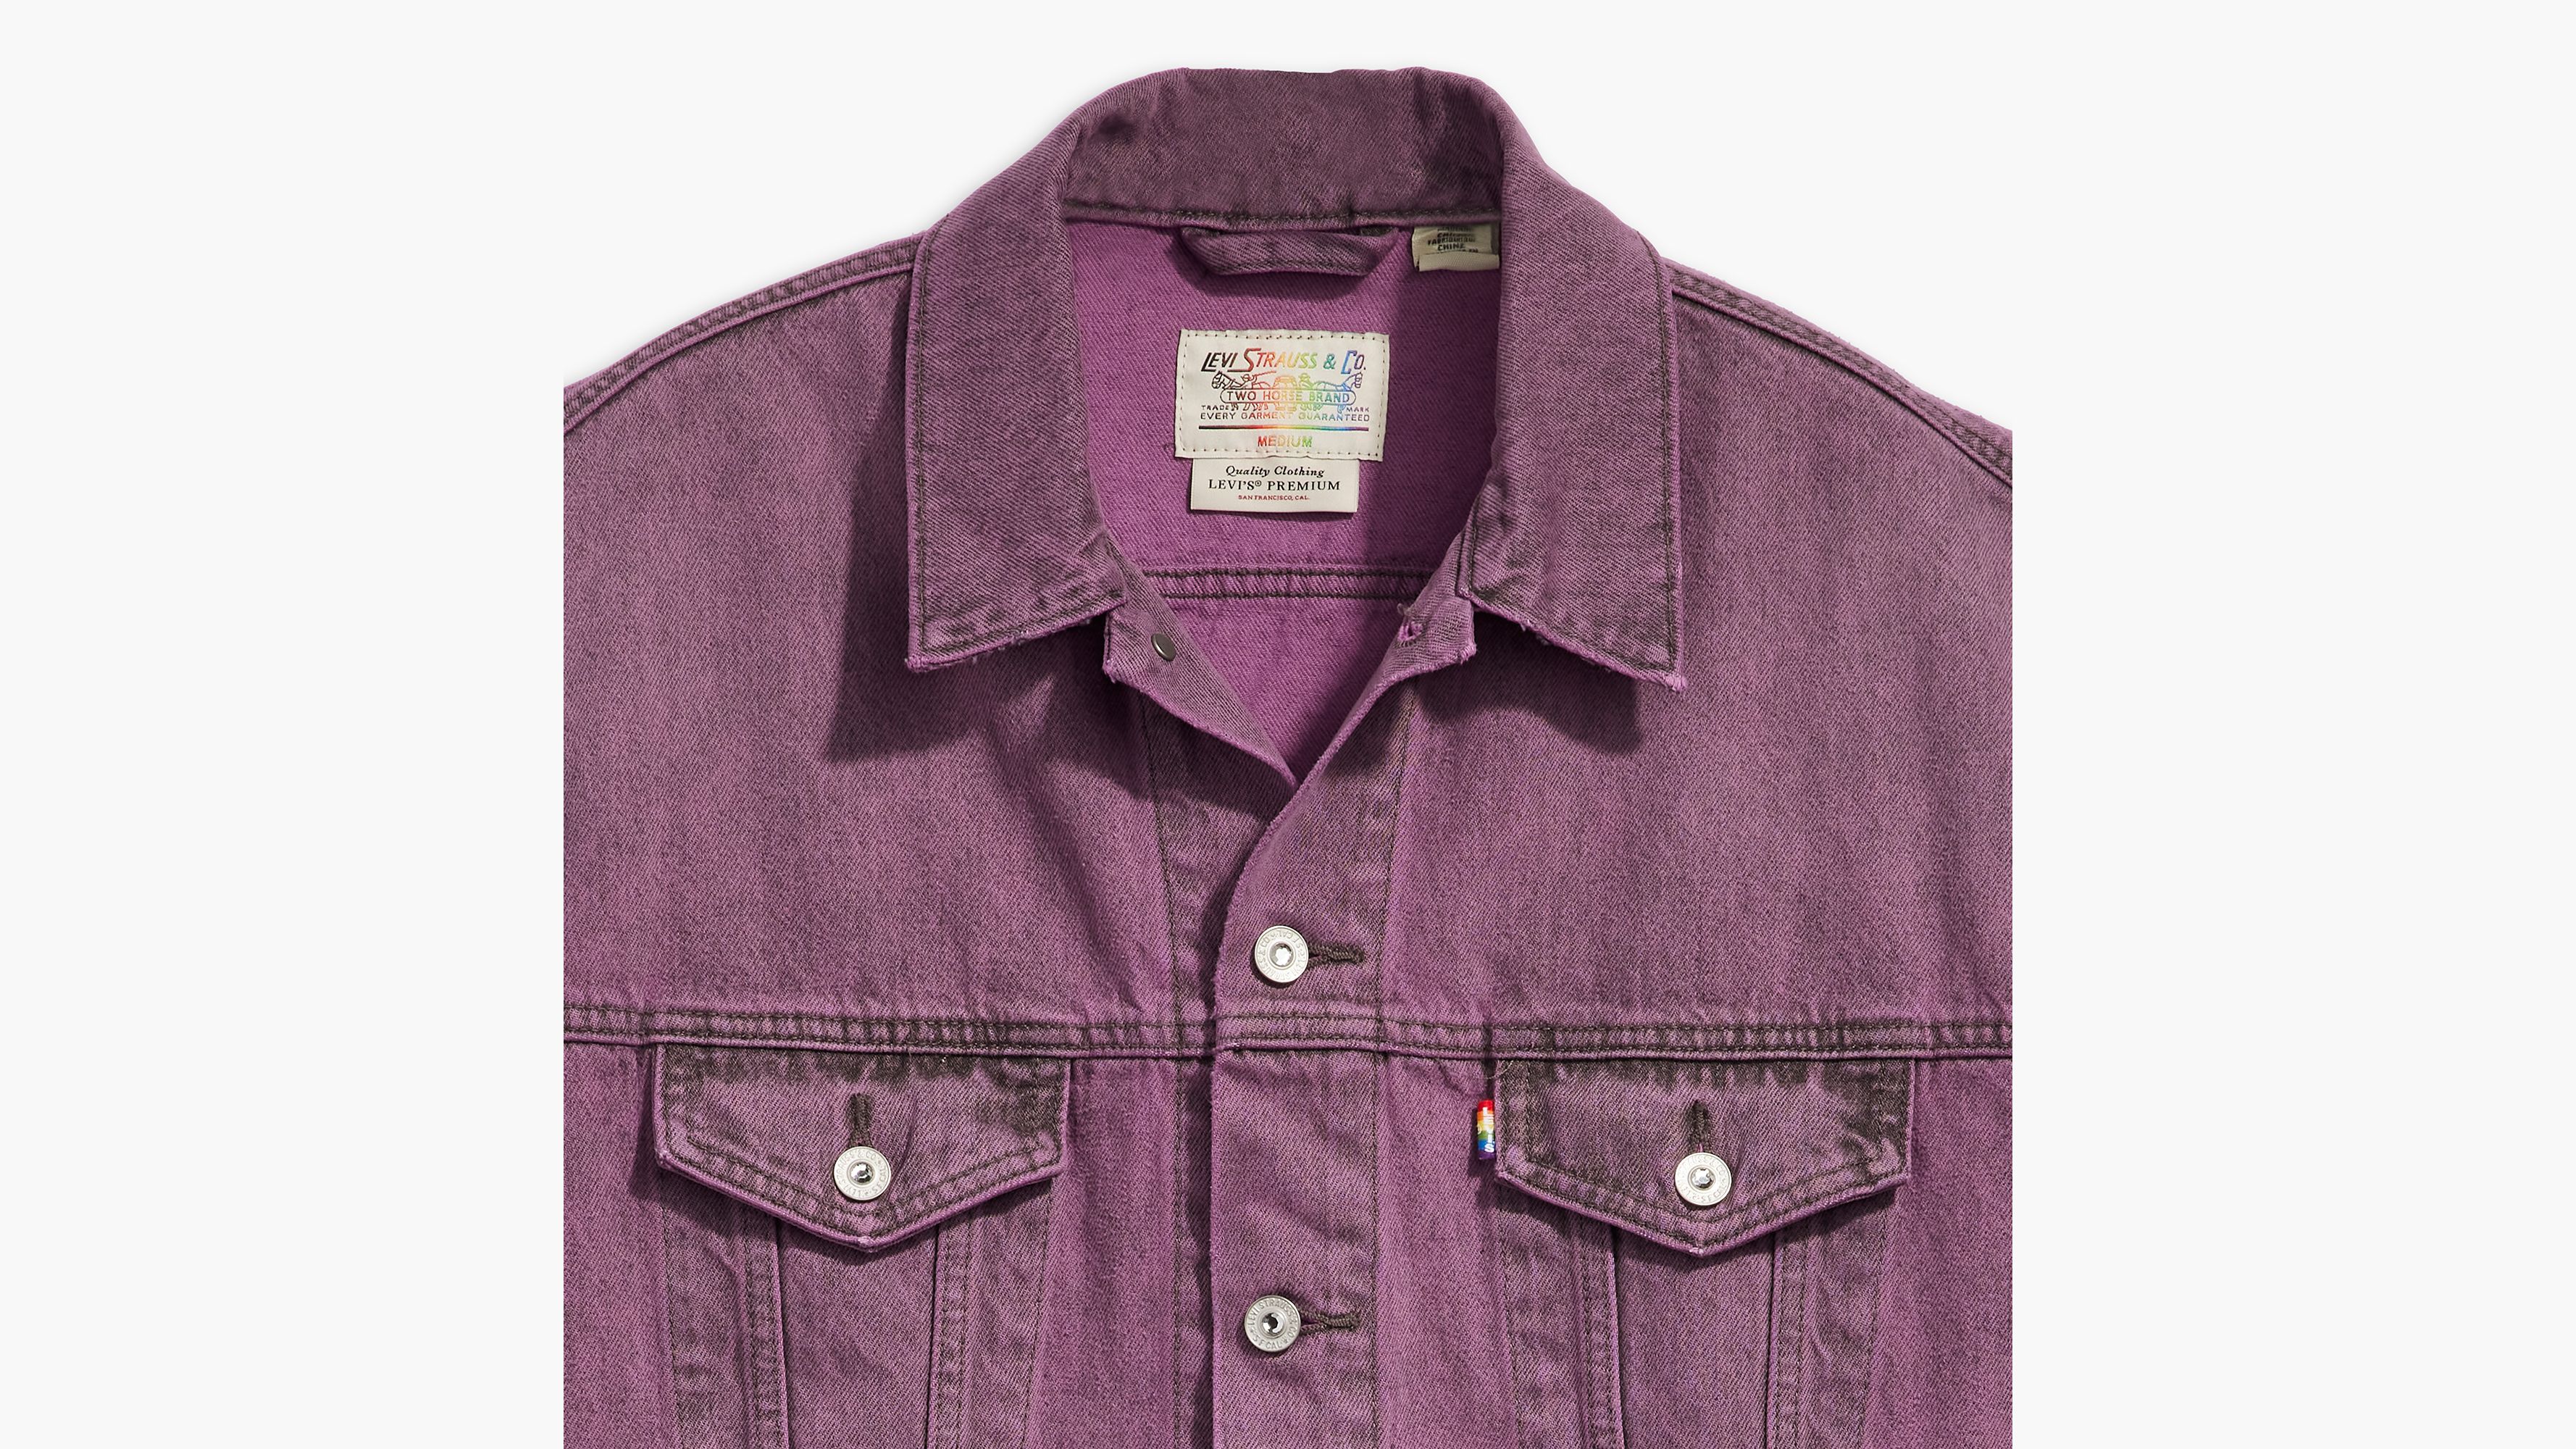 Levi's Purple Levi's Denim Jacket